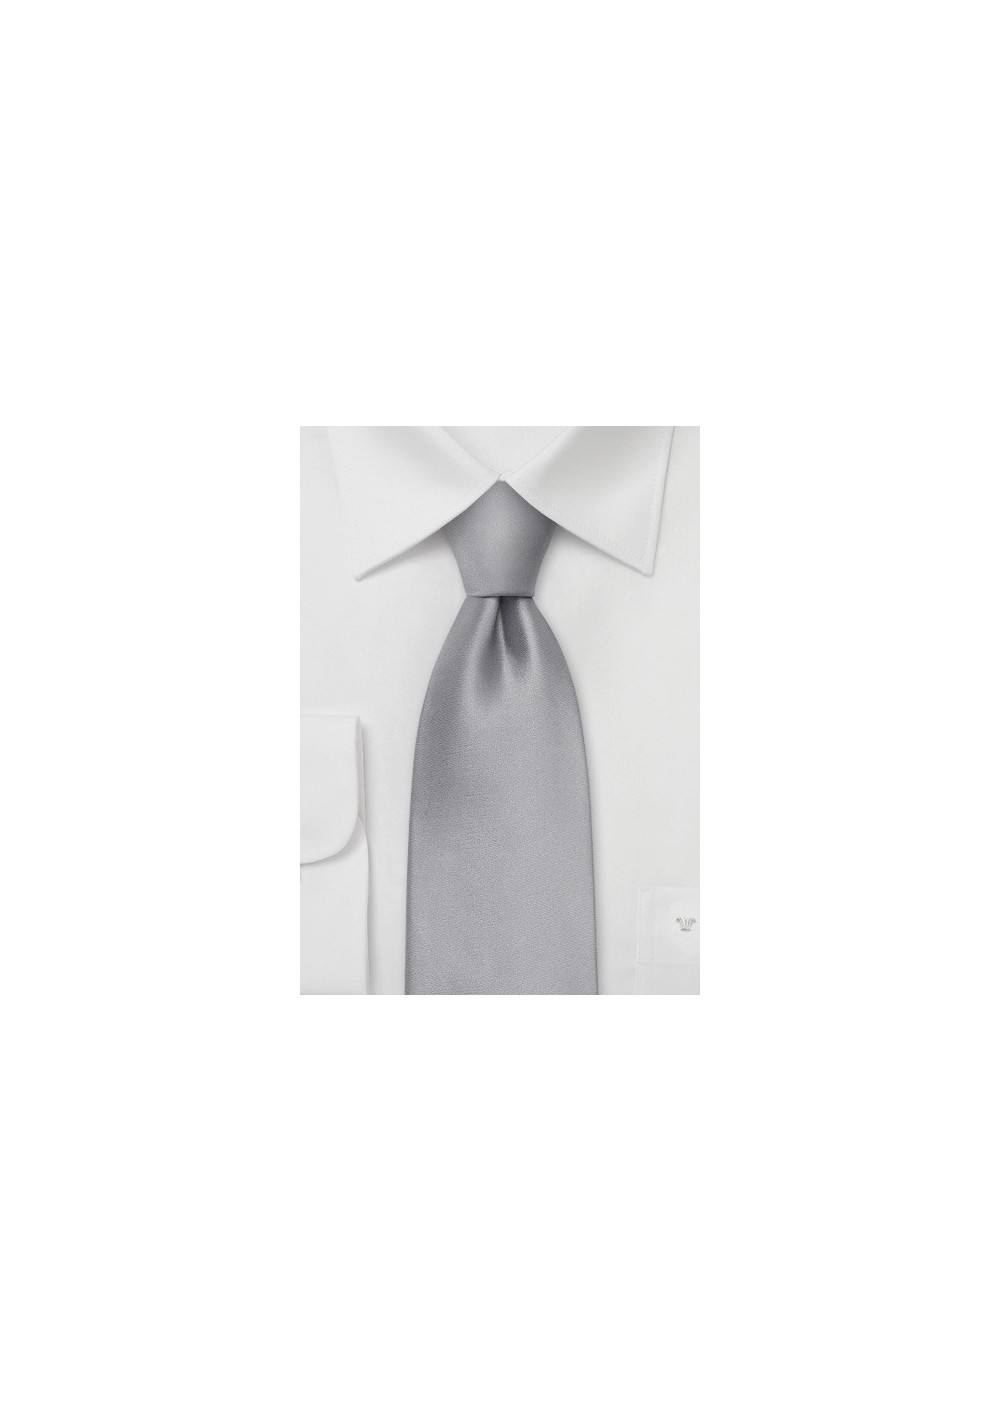 XL Bright Silver Silk Tie